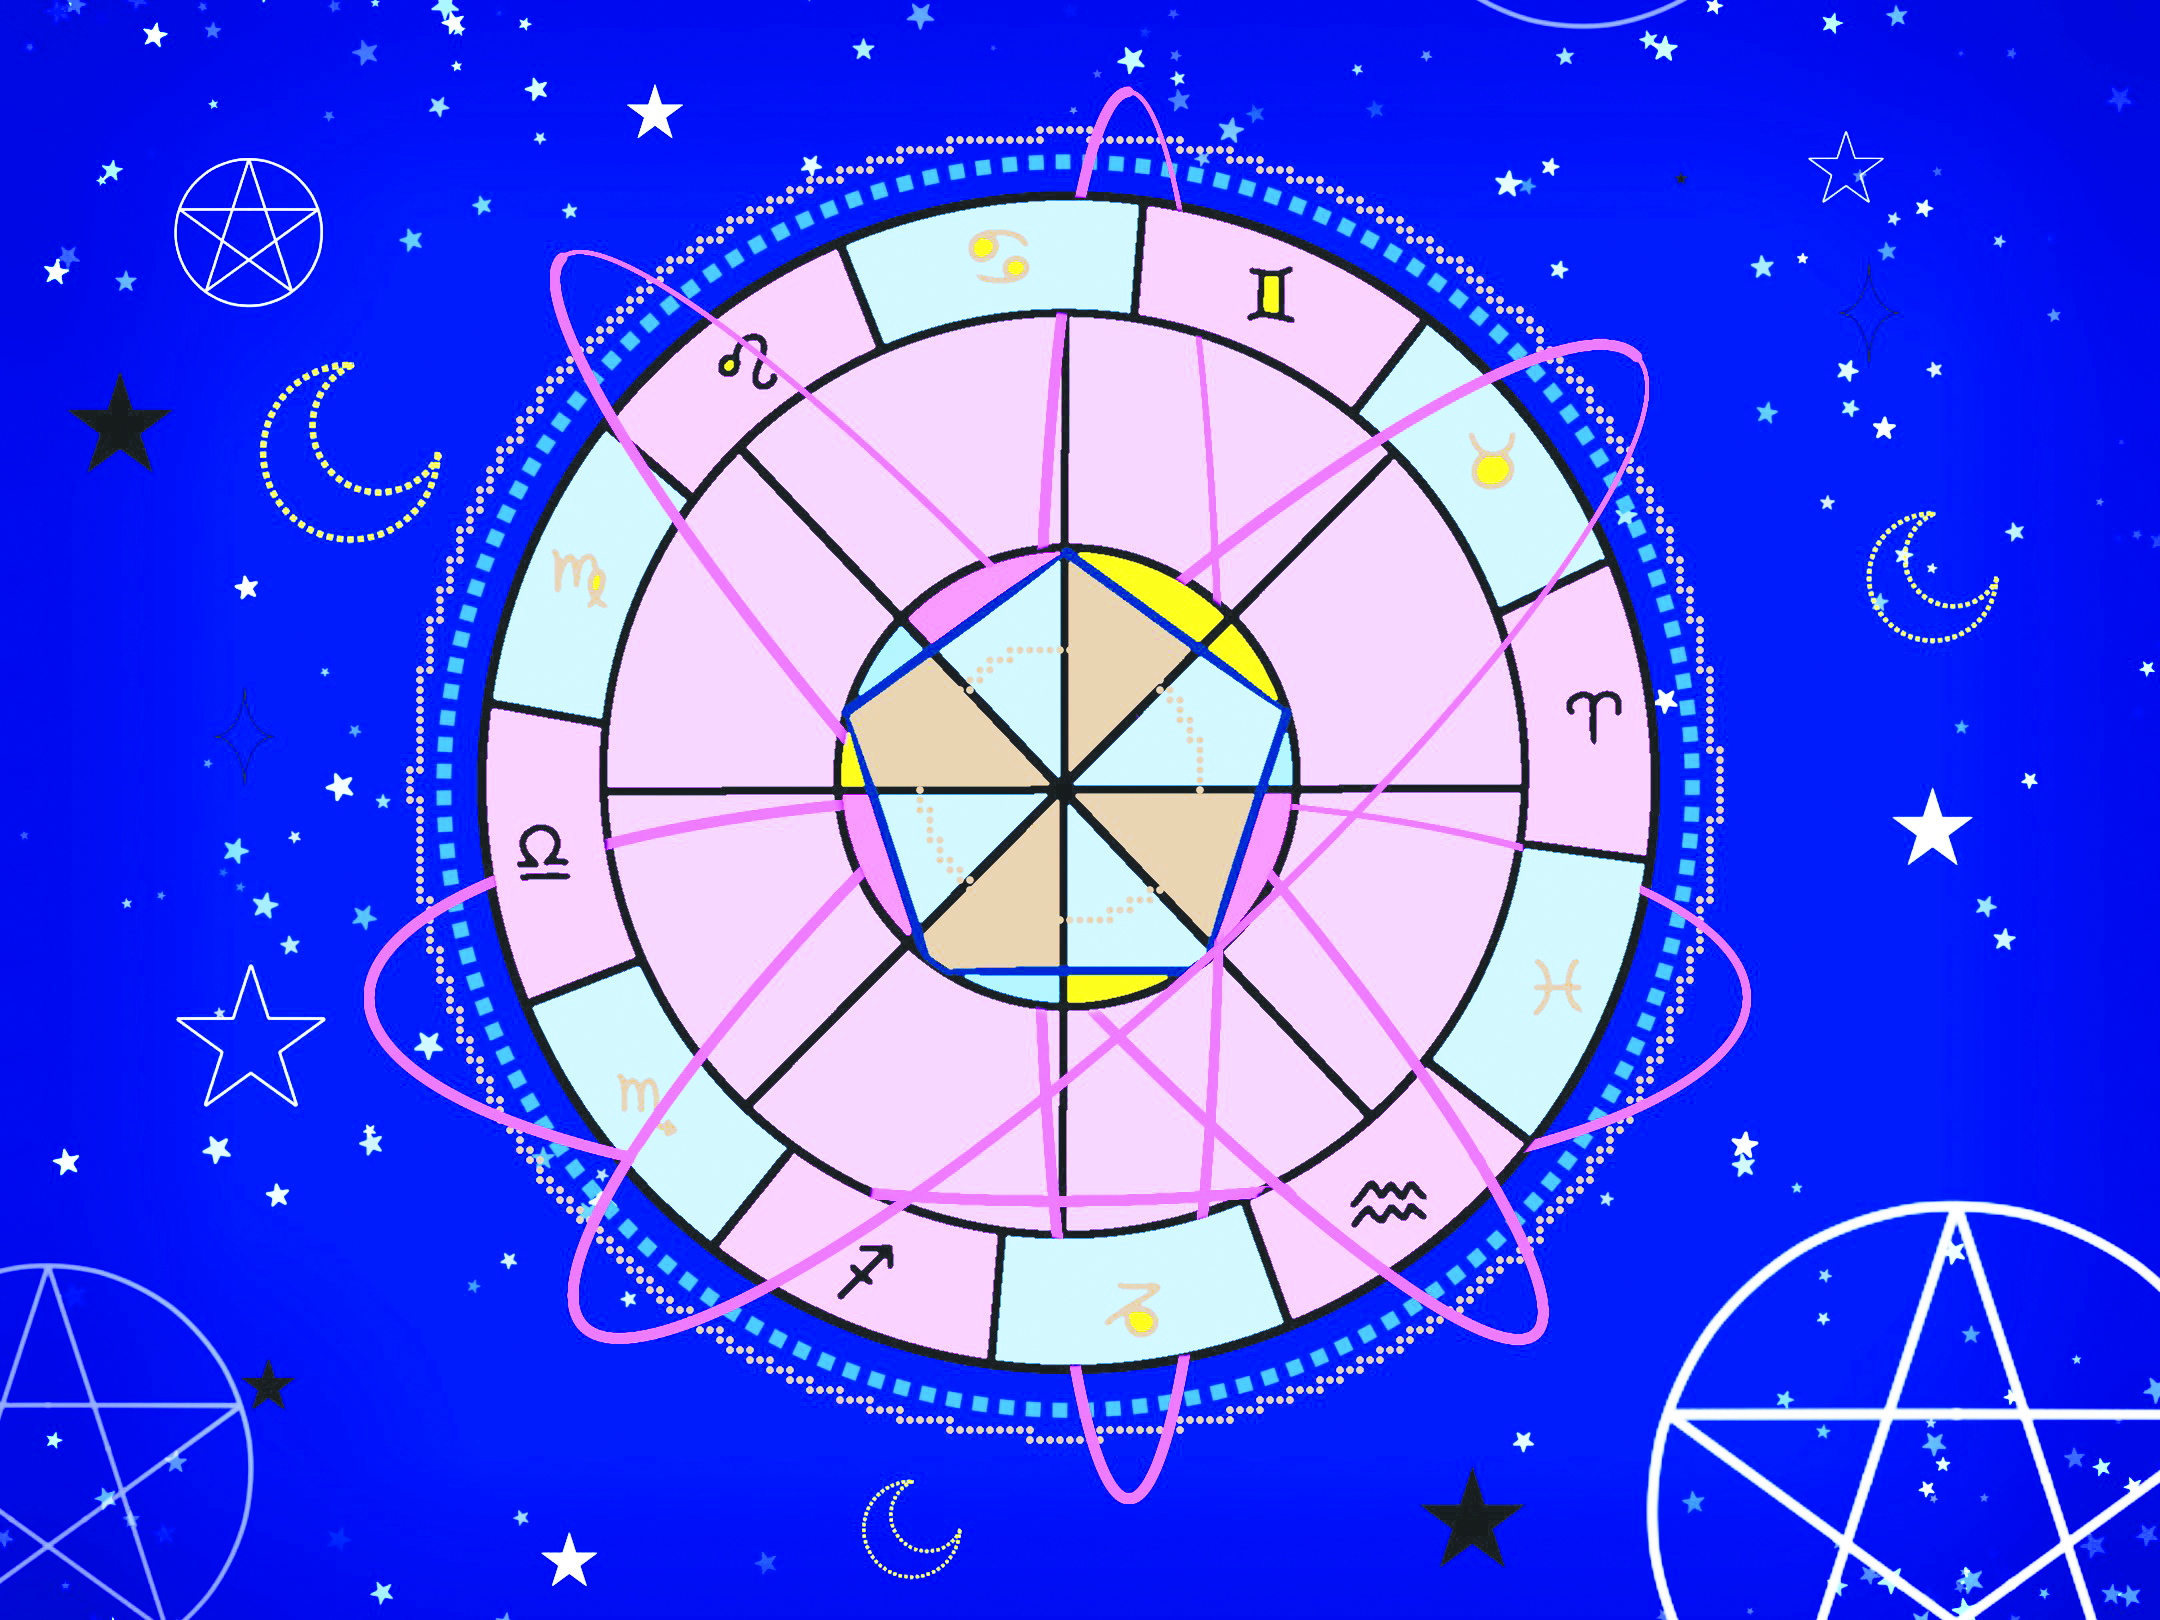 Horoscopes Deemed Unscientific